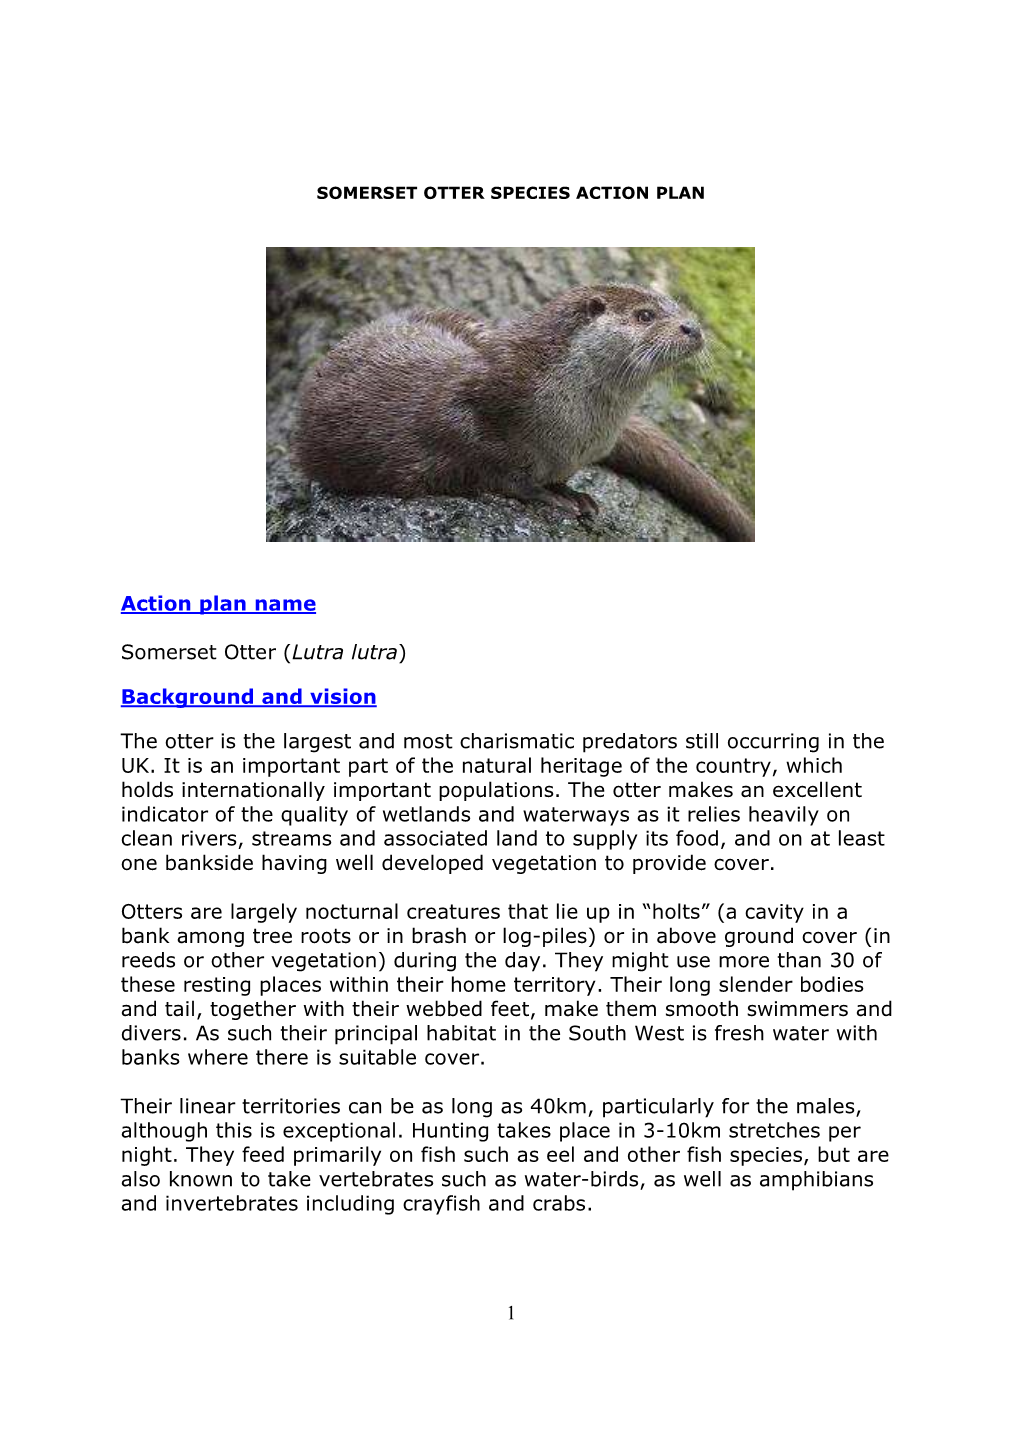 Somerset Otter Species Action Plan